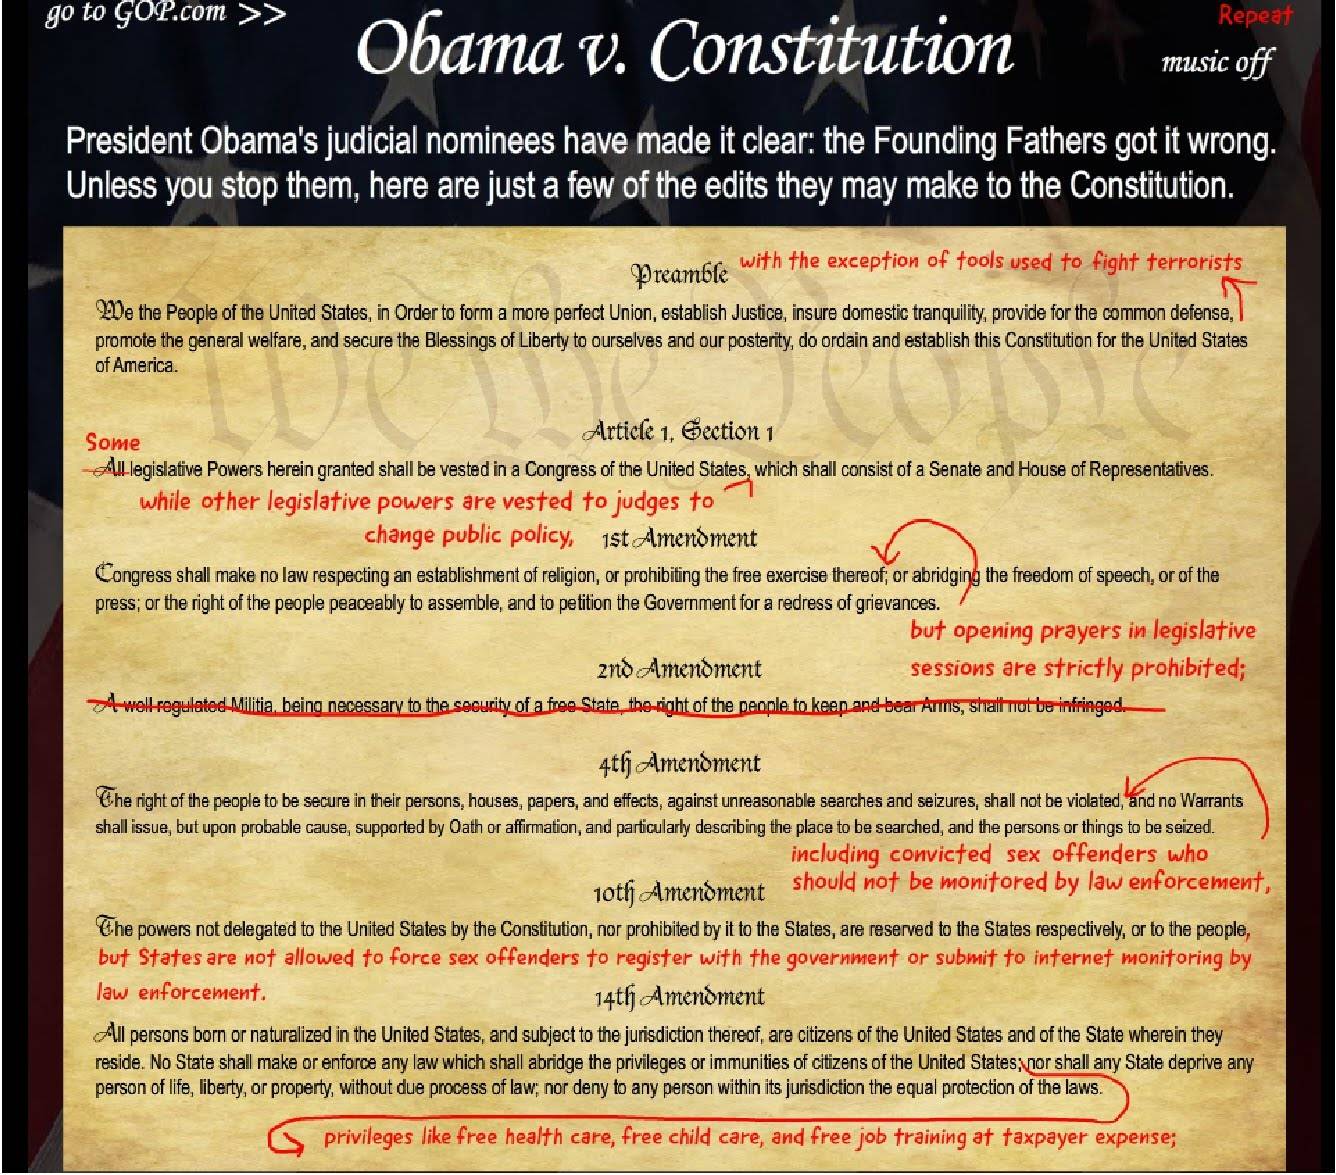 rnc+site+obama+v+constitution.jpeg